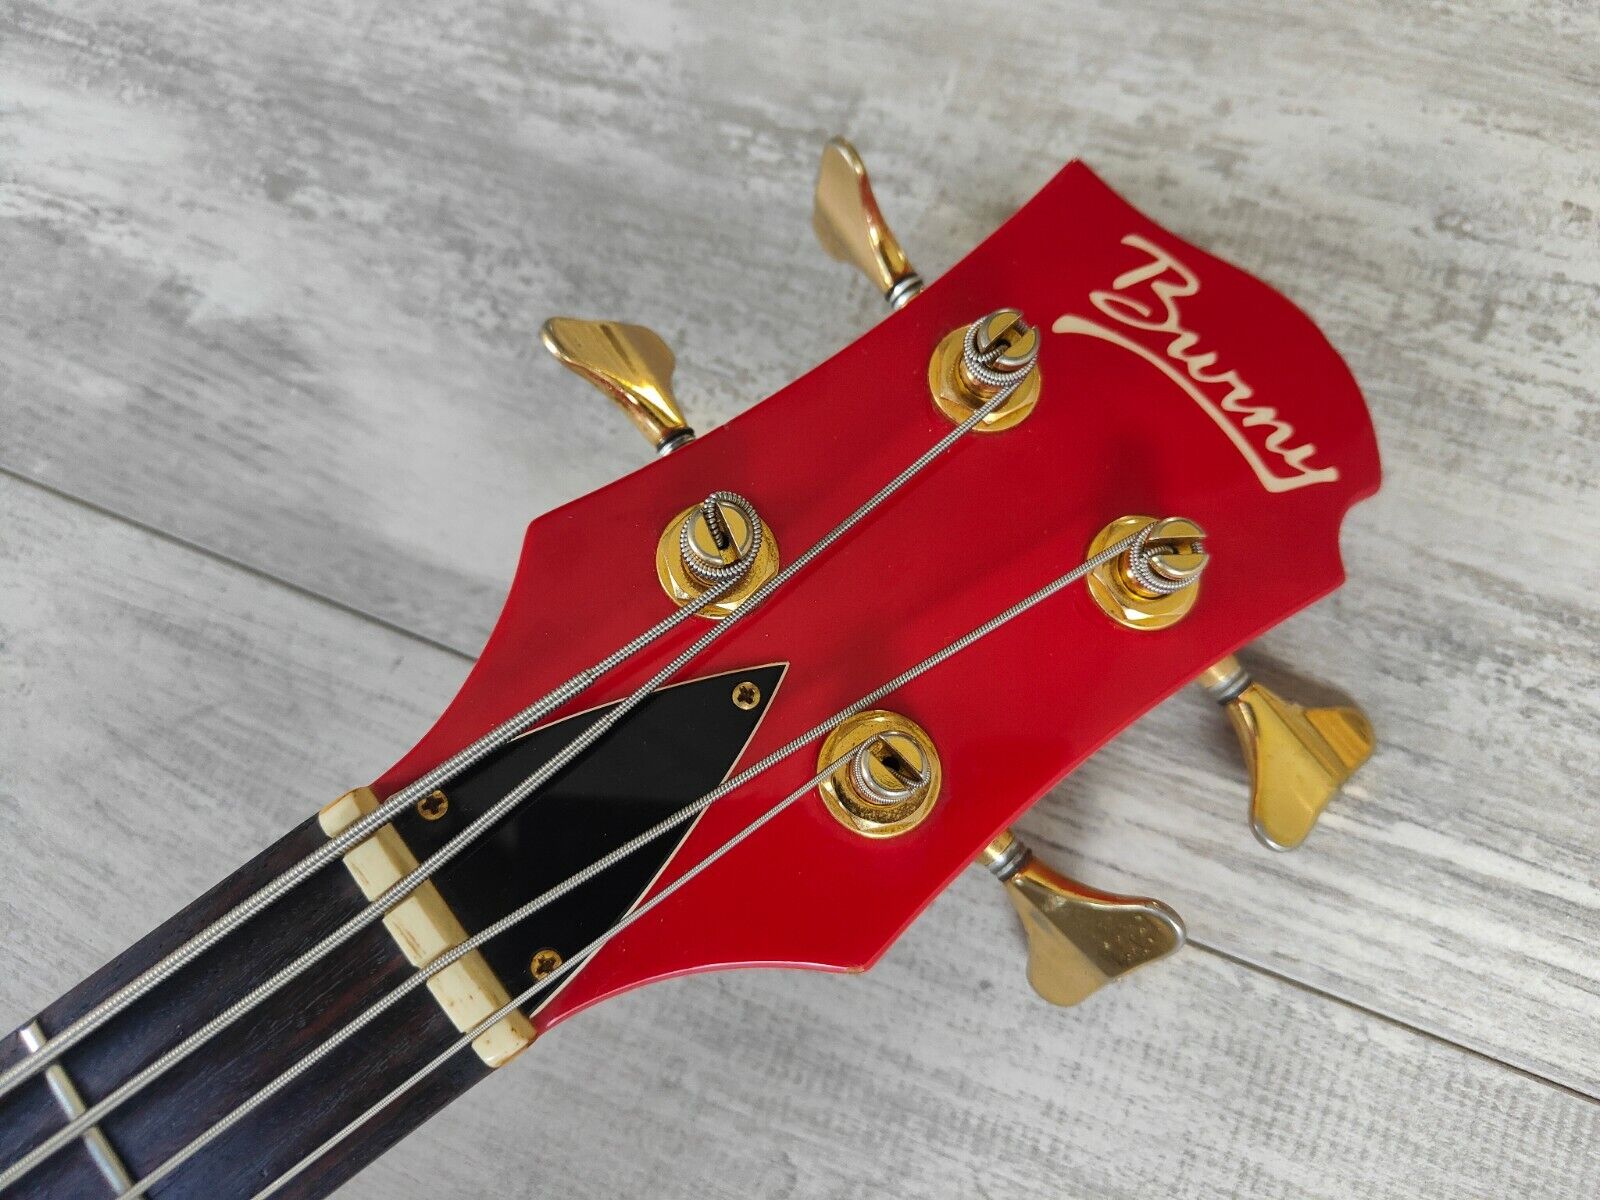 1990's Burny MB-95Y Neckthrough Mockingbird Bass (Red)